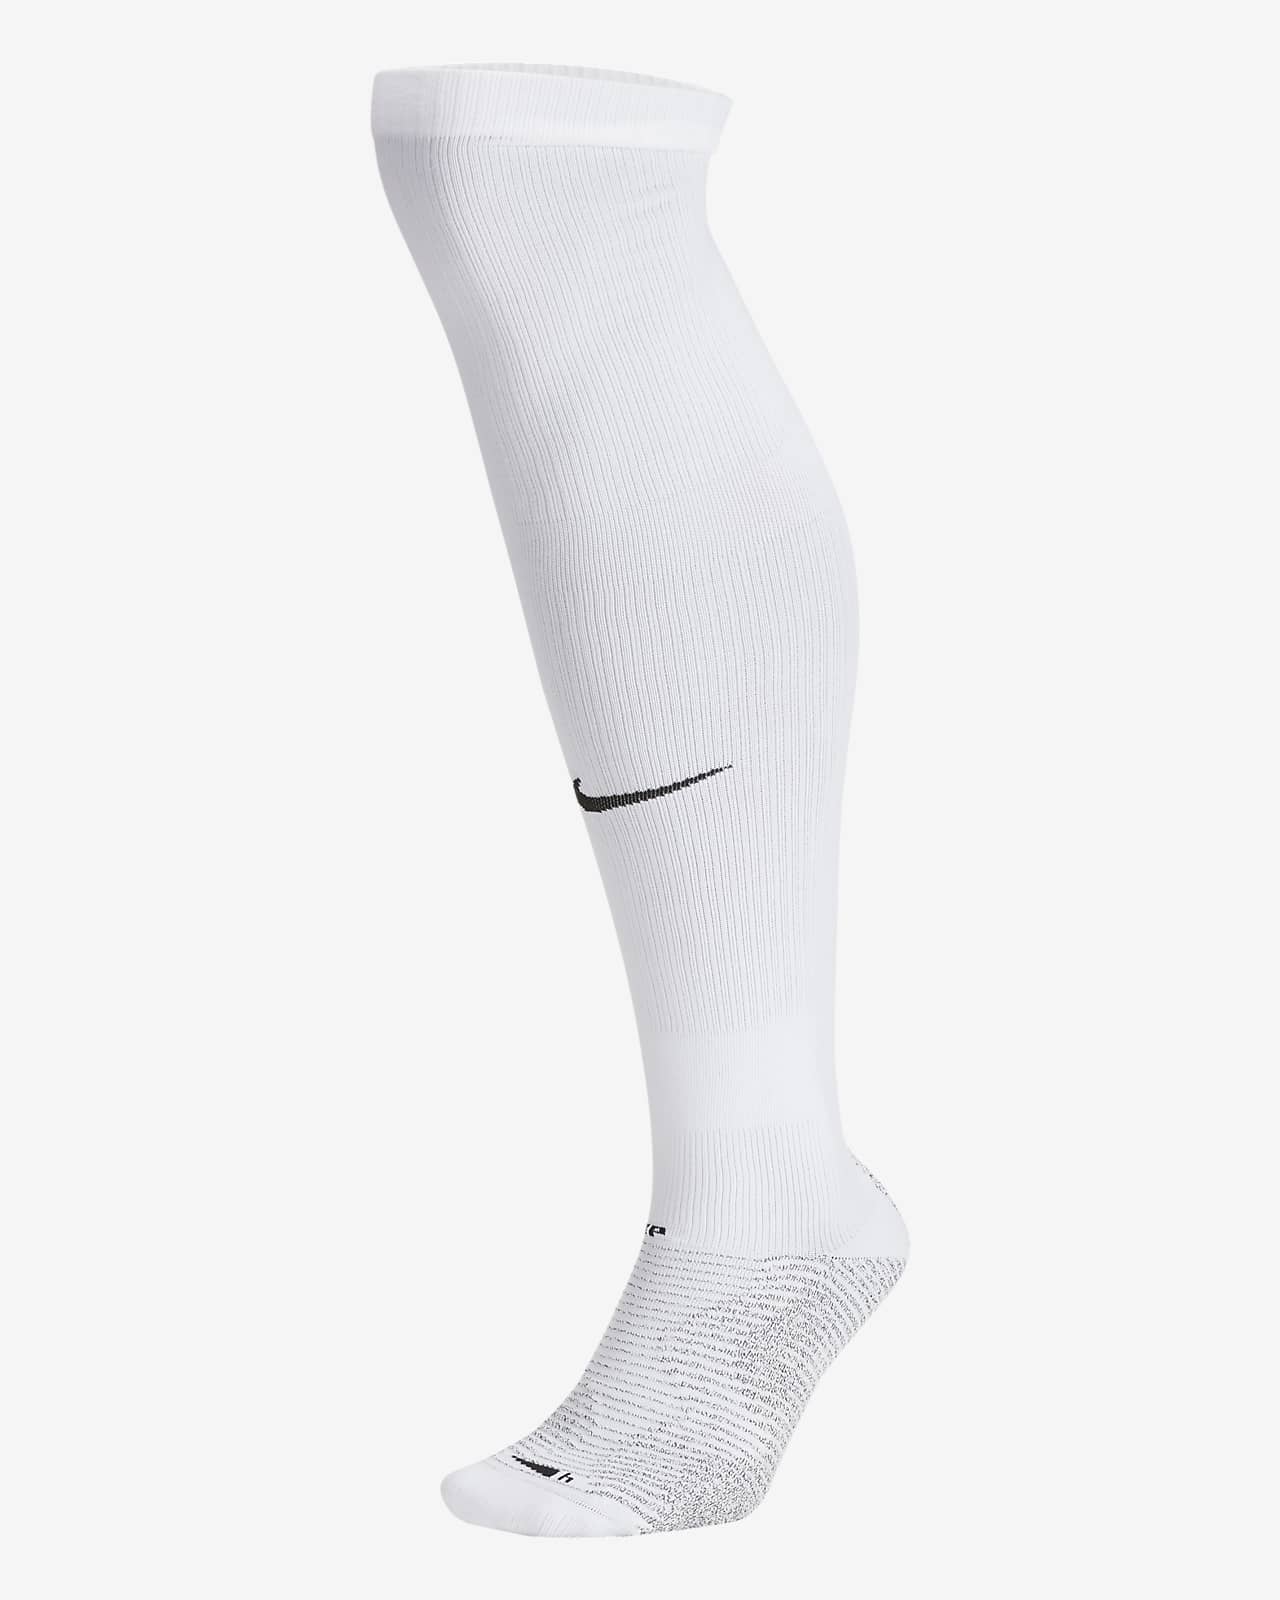 Nike NikeGrip Strike Socks Review 